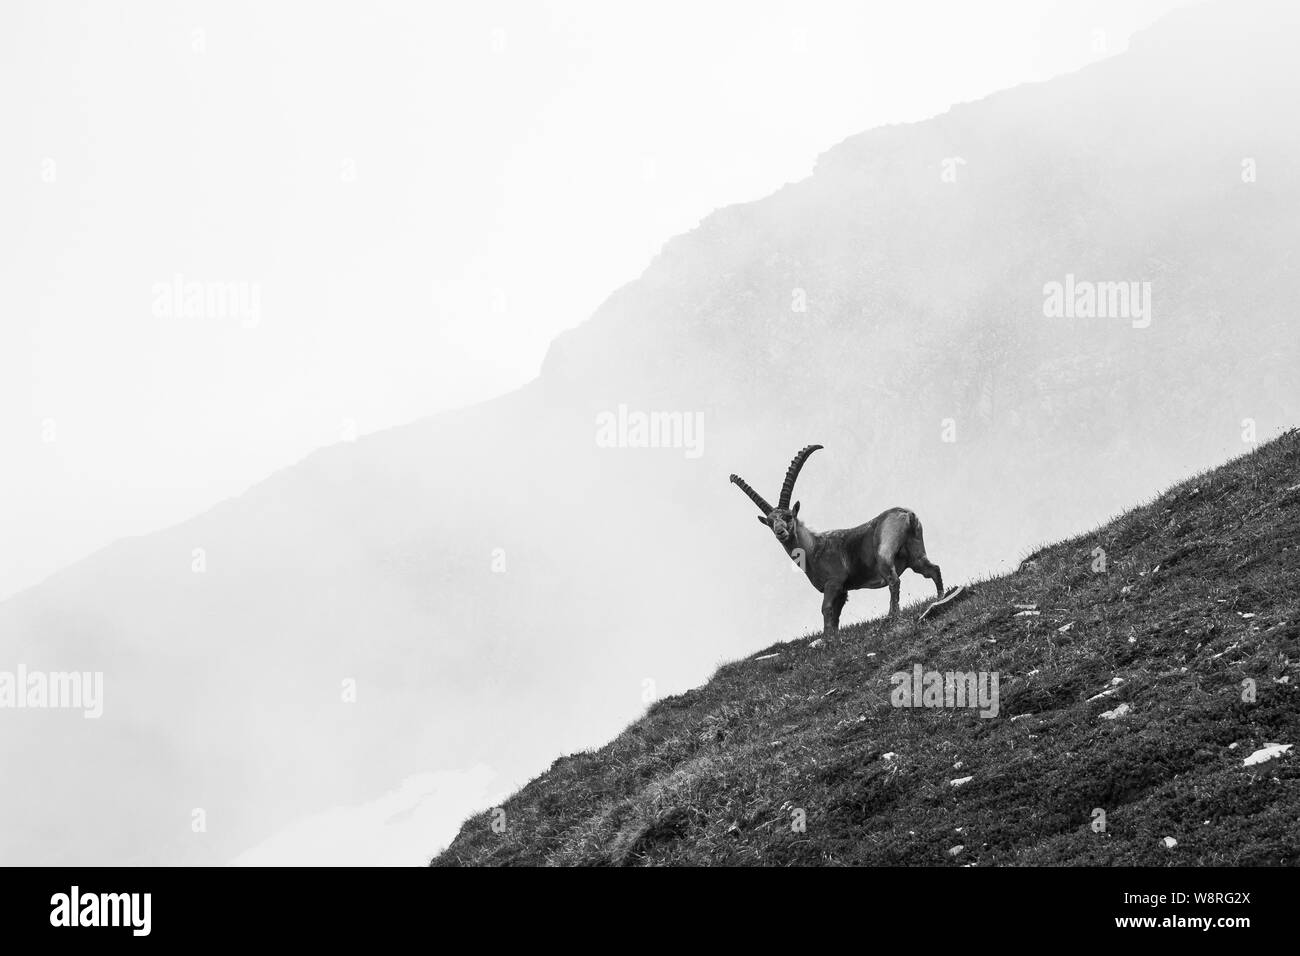 Capra ibex. Steinbock. Fauna alpina, Glocknergruppe nelle Alpi austriache. Fotografia in bianco nero. Foto Stock